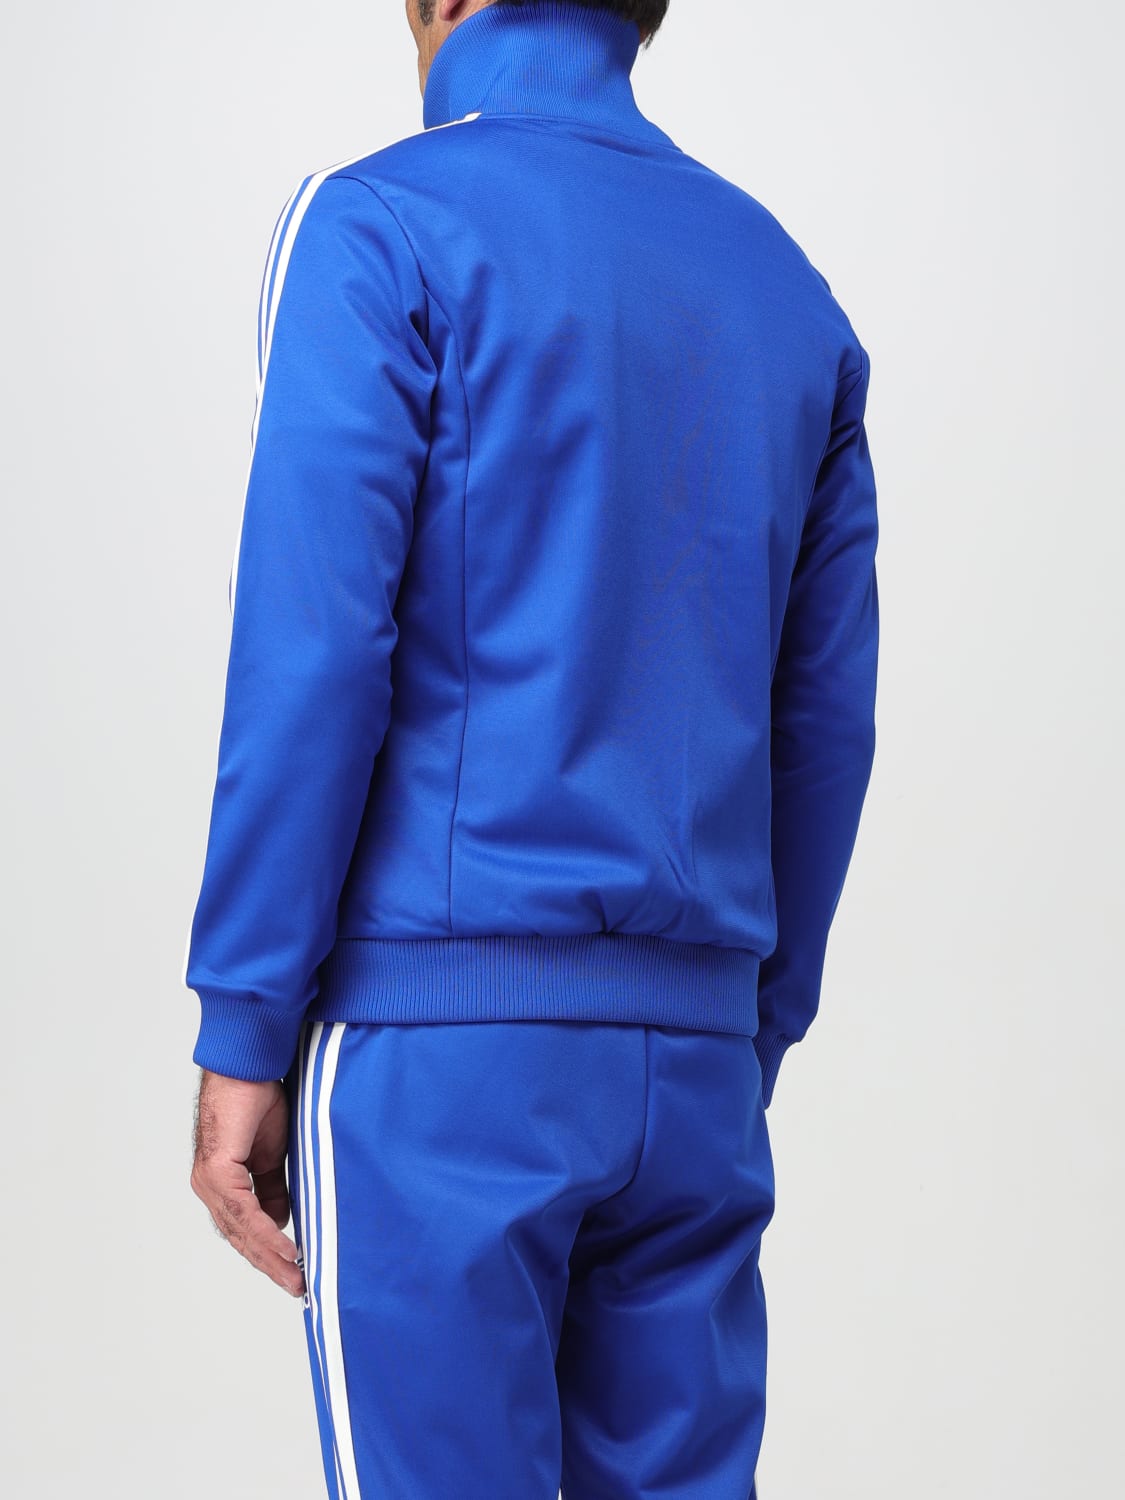 ADIDAS ORIGINALS: sweatshirt for Adidas Originals man Blue | IU2122 sweatshirt - Gnawed online at